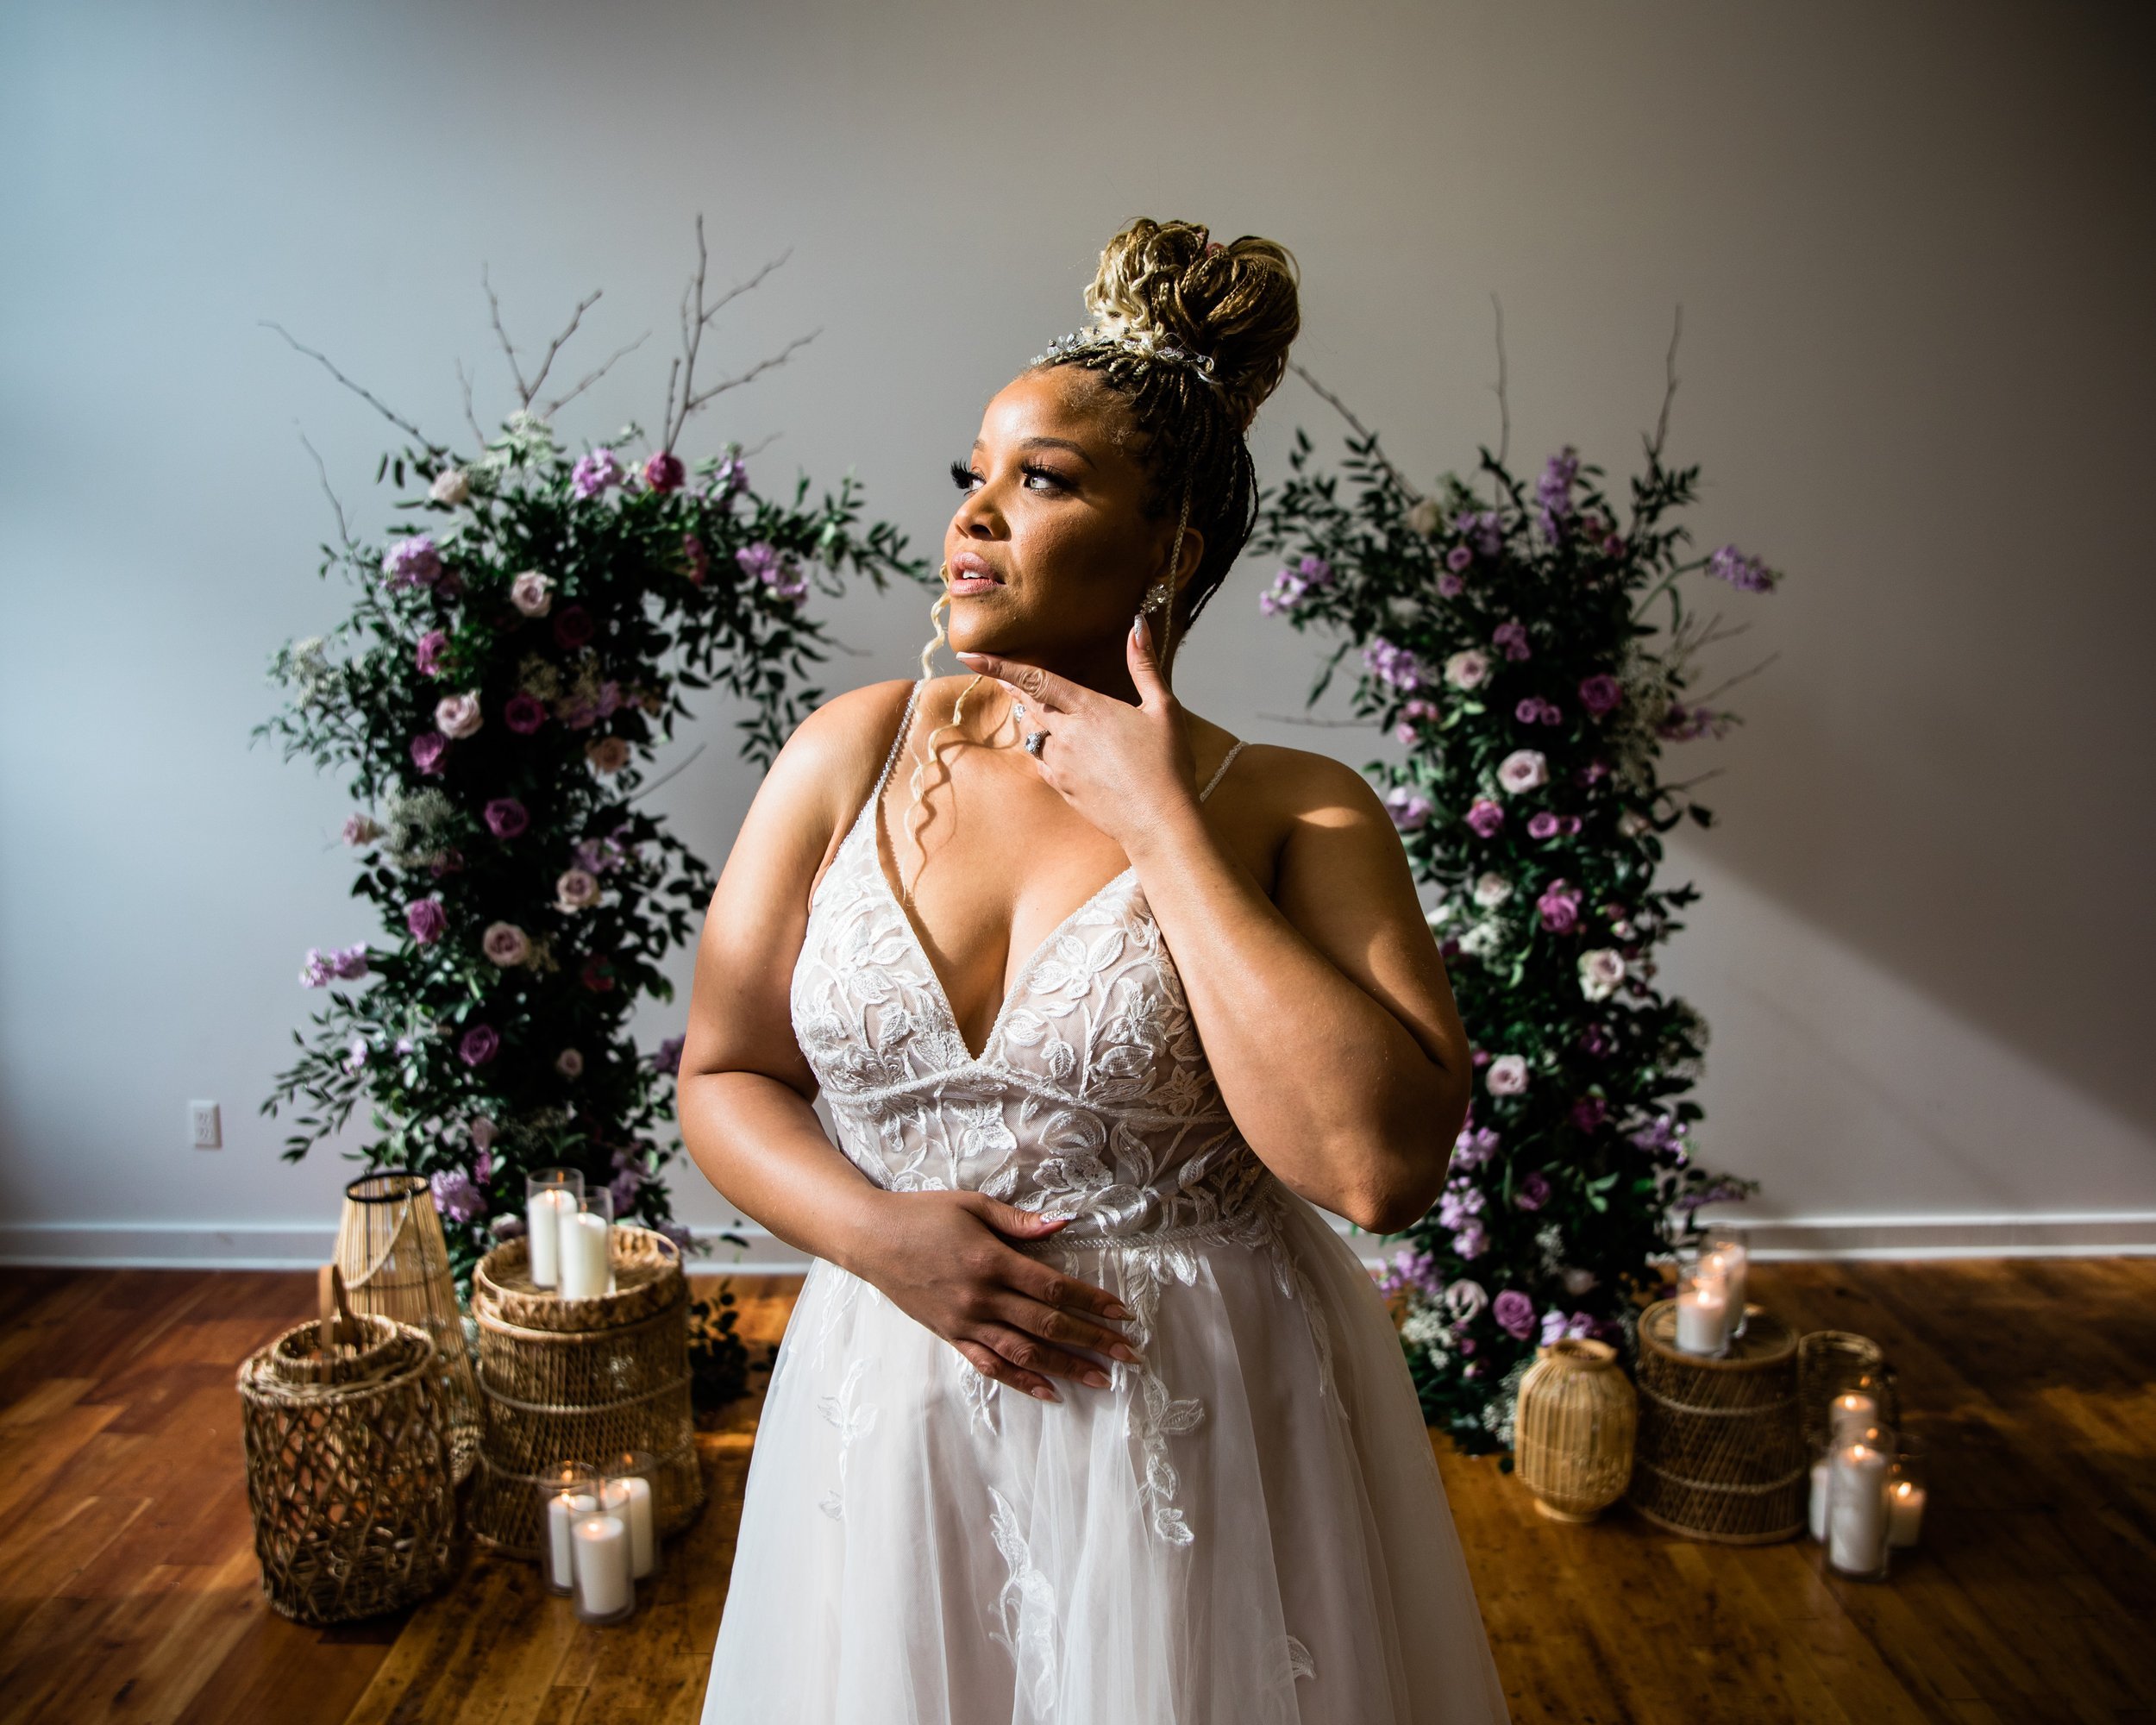 Stunning Bride Portraits by Black Wedding Photographer Megapixels Media.jpeg